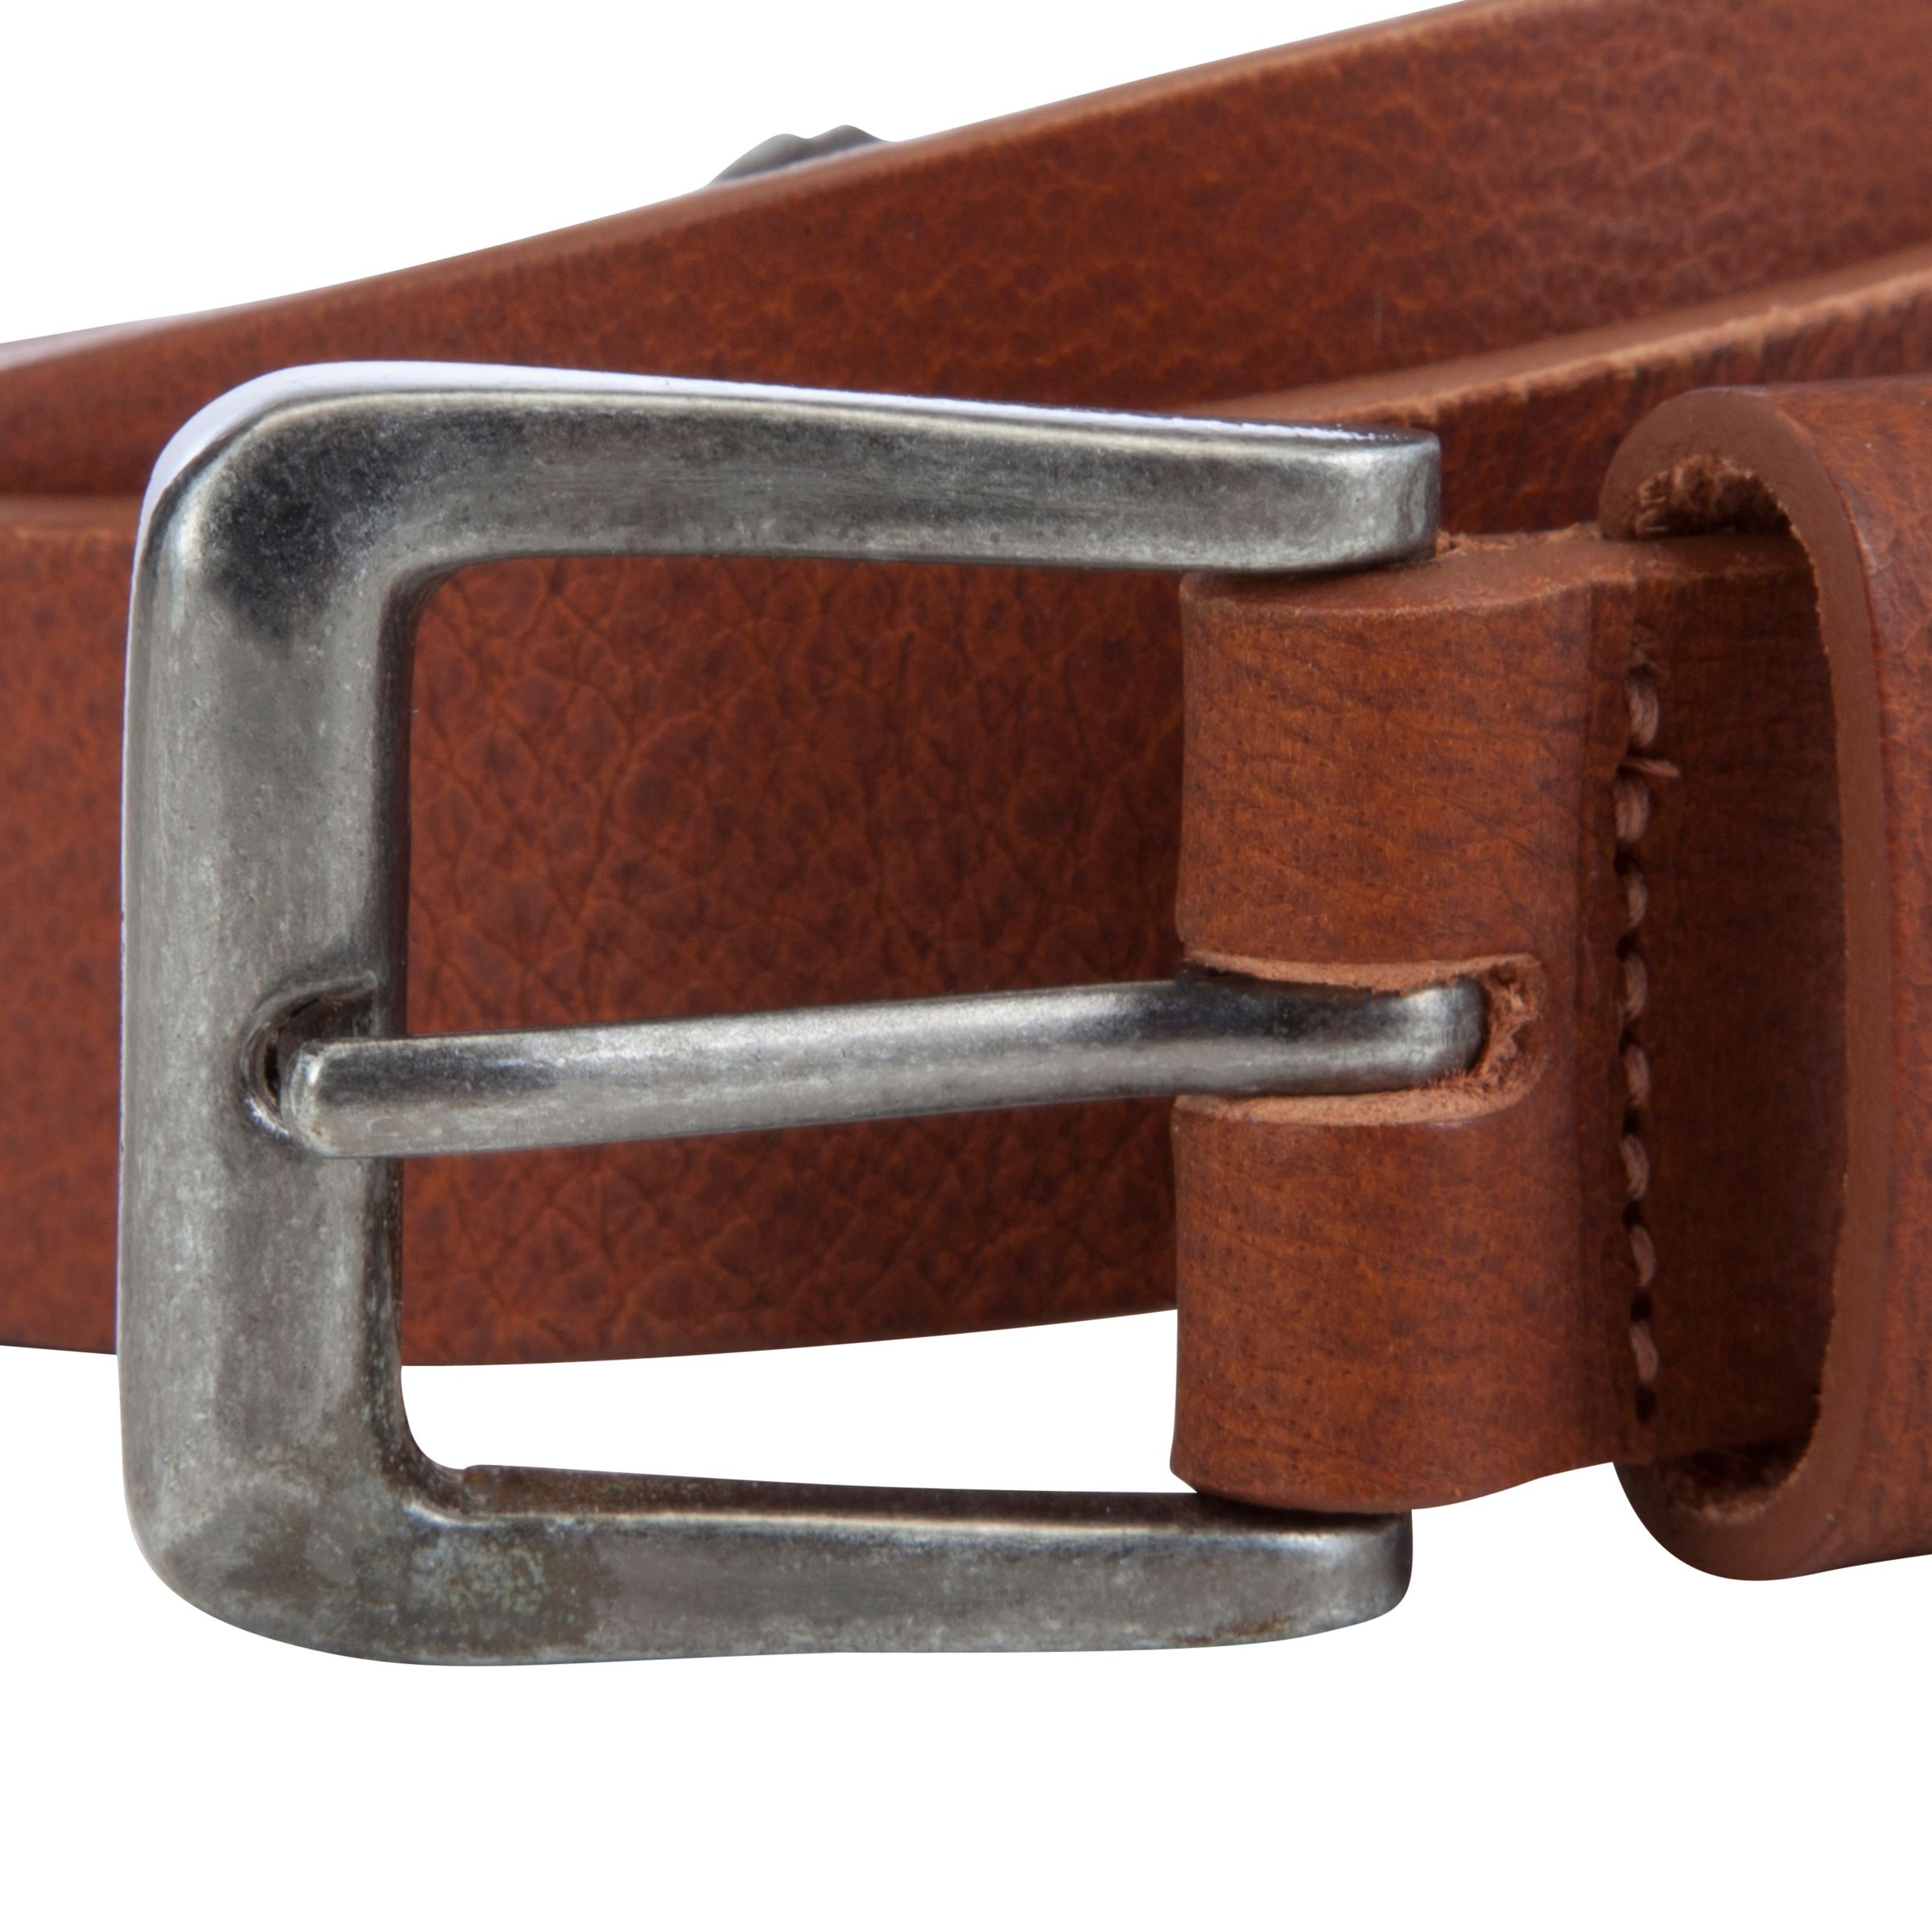 John Lewis Boy Leather Belt, Tan, S/M